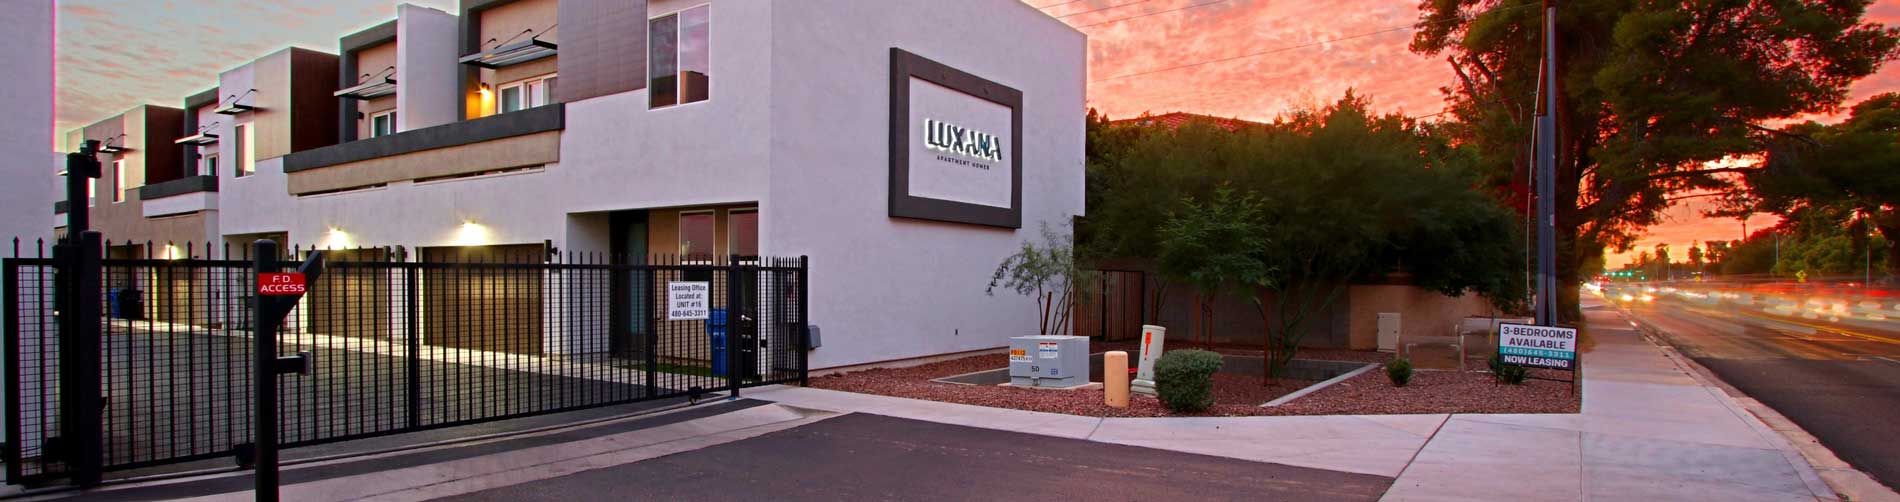 Gated Luxana Apartments Community in Phoenix, AZ